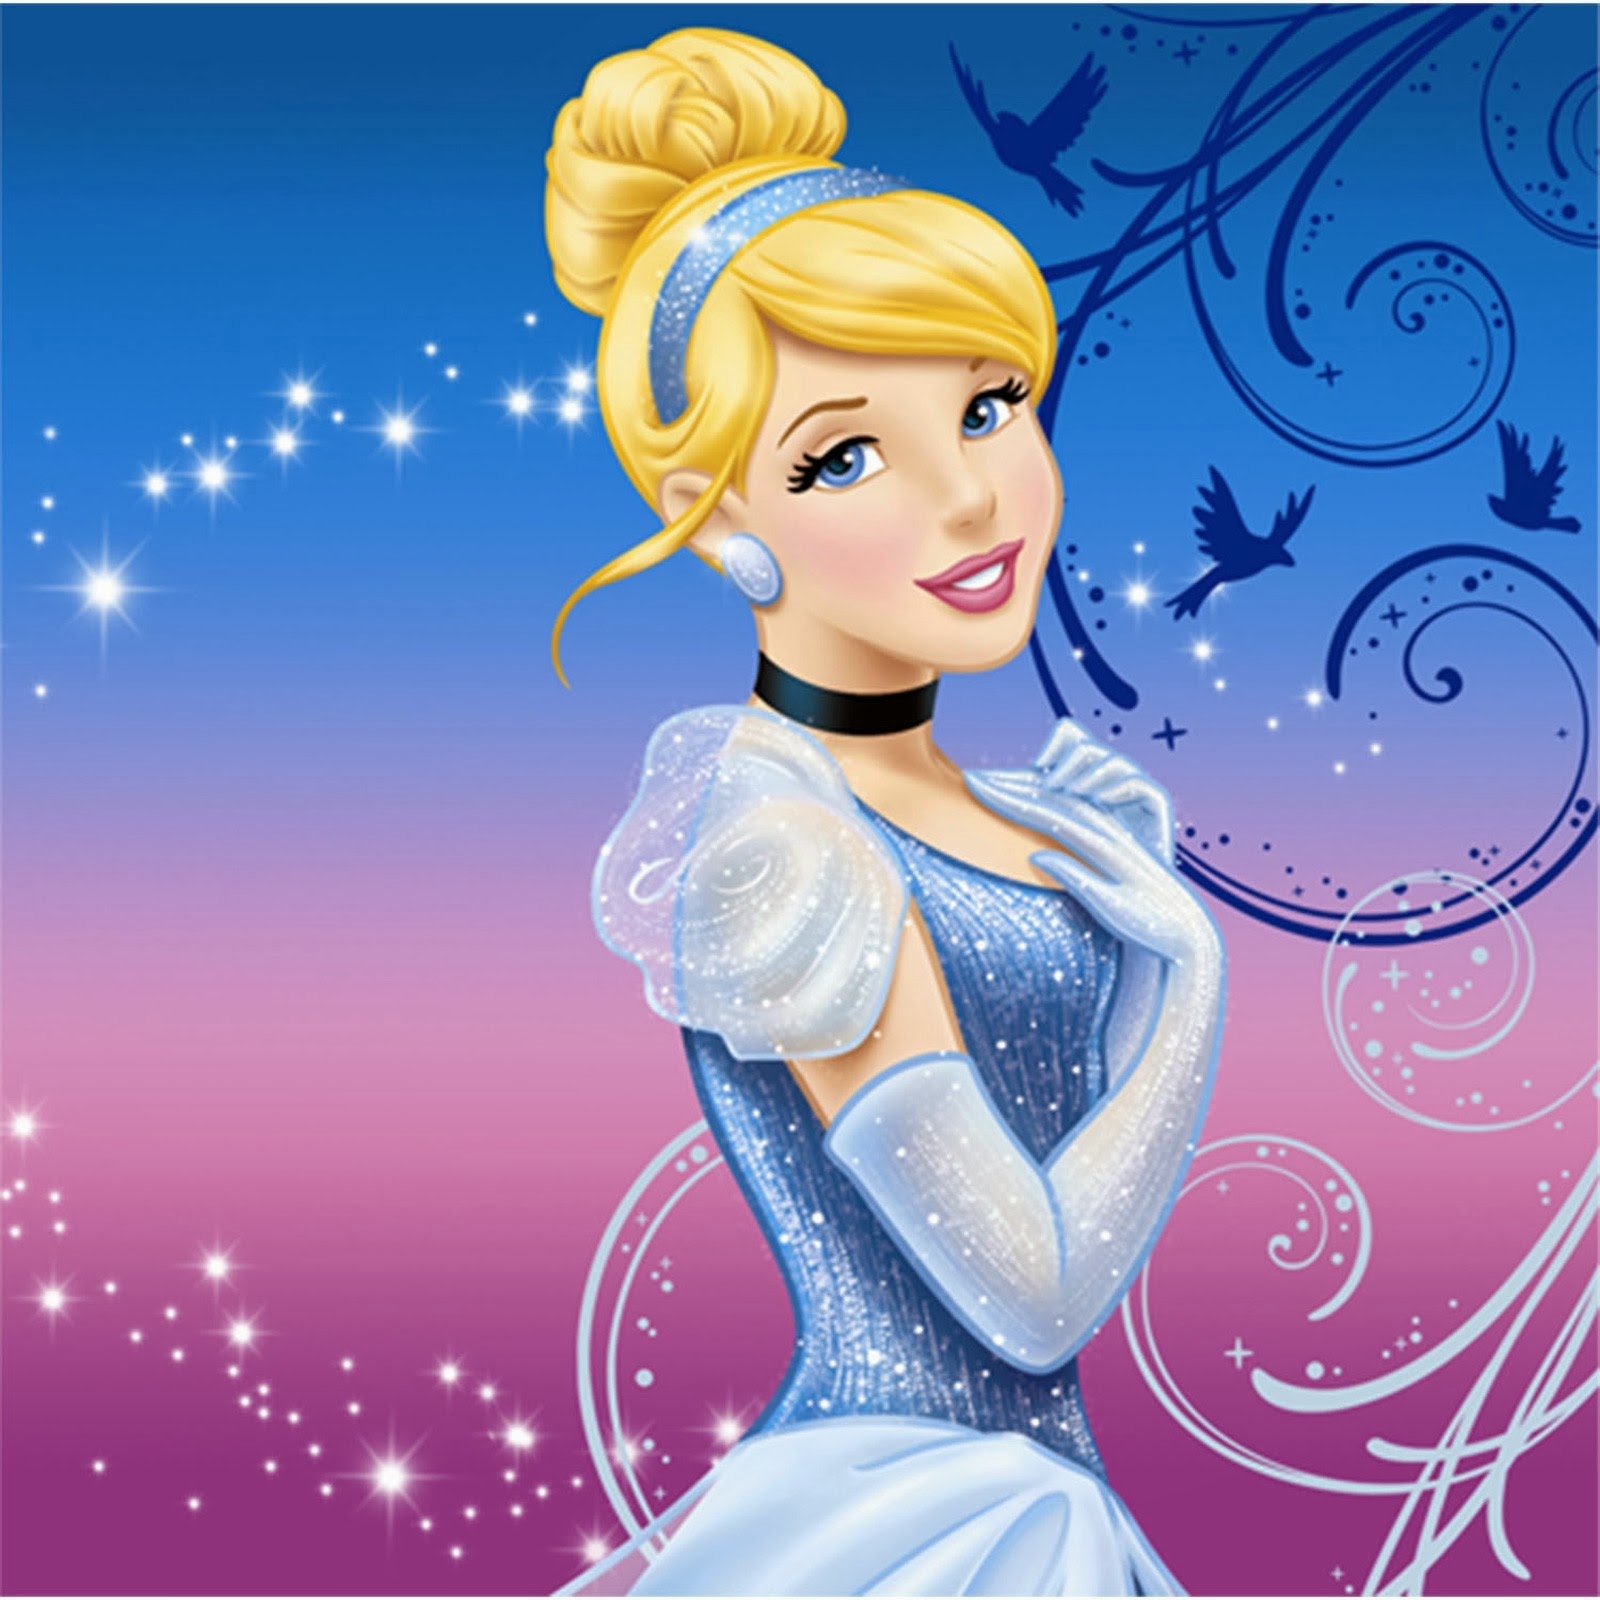 disney princess cartoon images - disney princess cartoon full movie